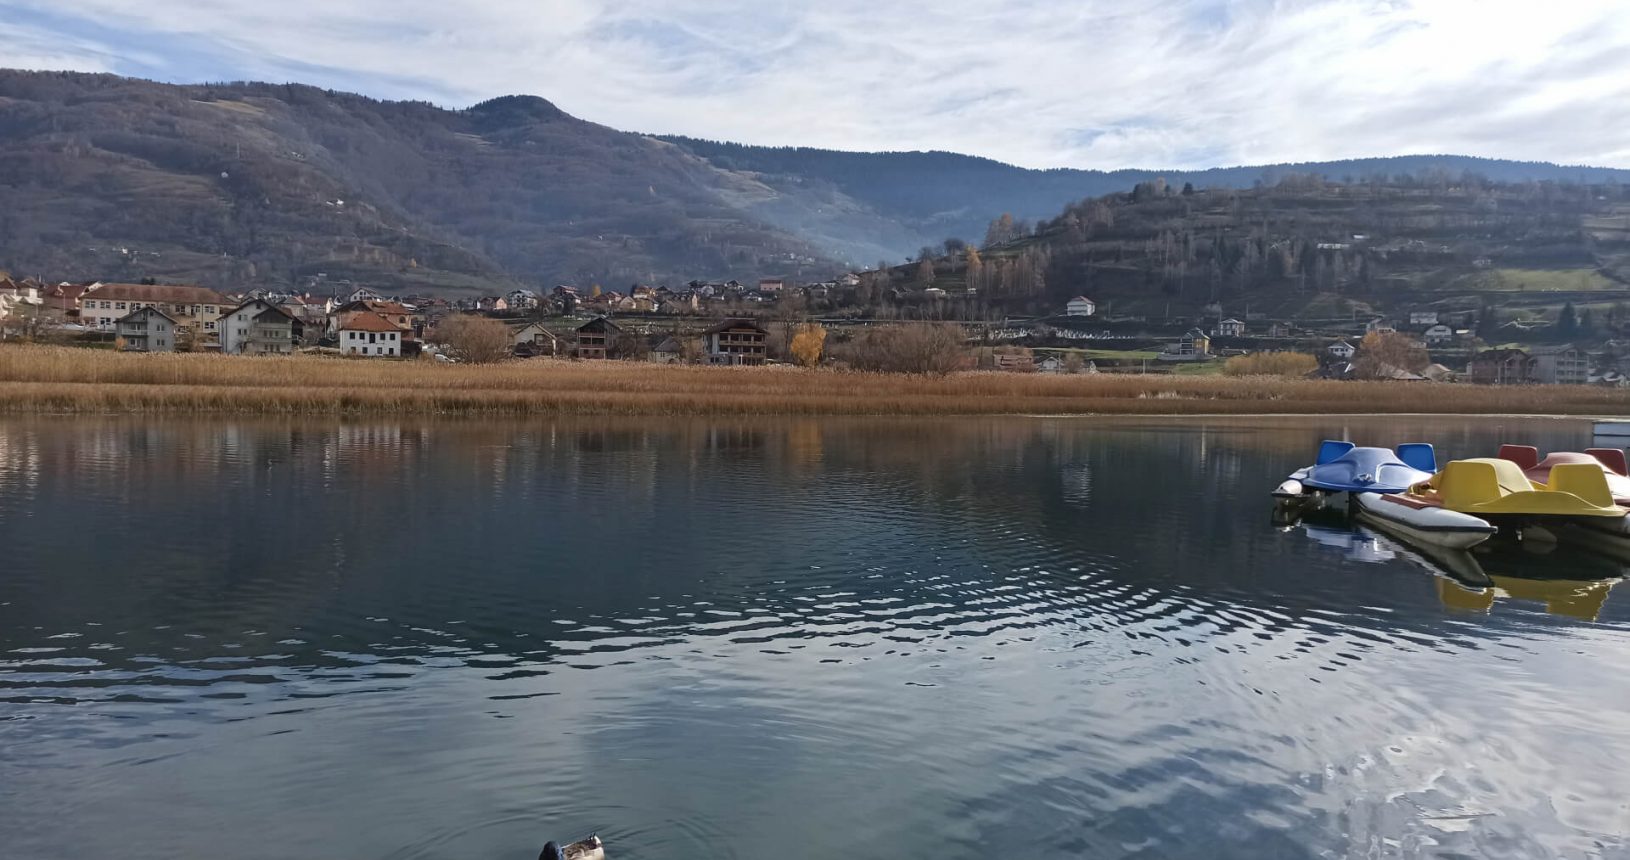 Ducks in Plav lake